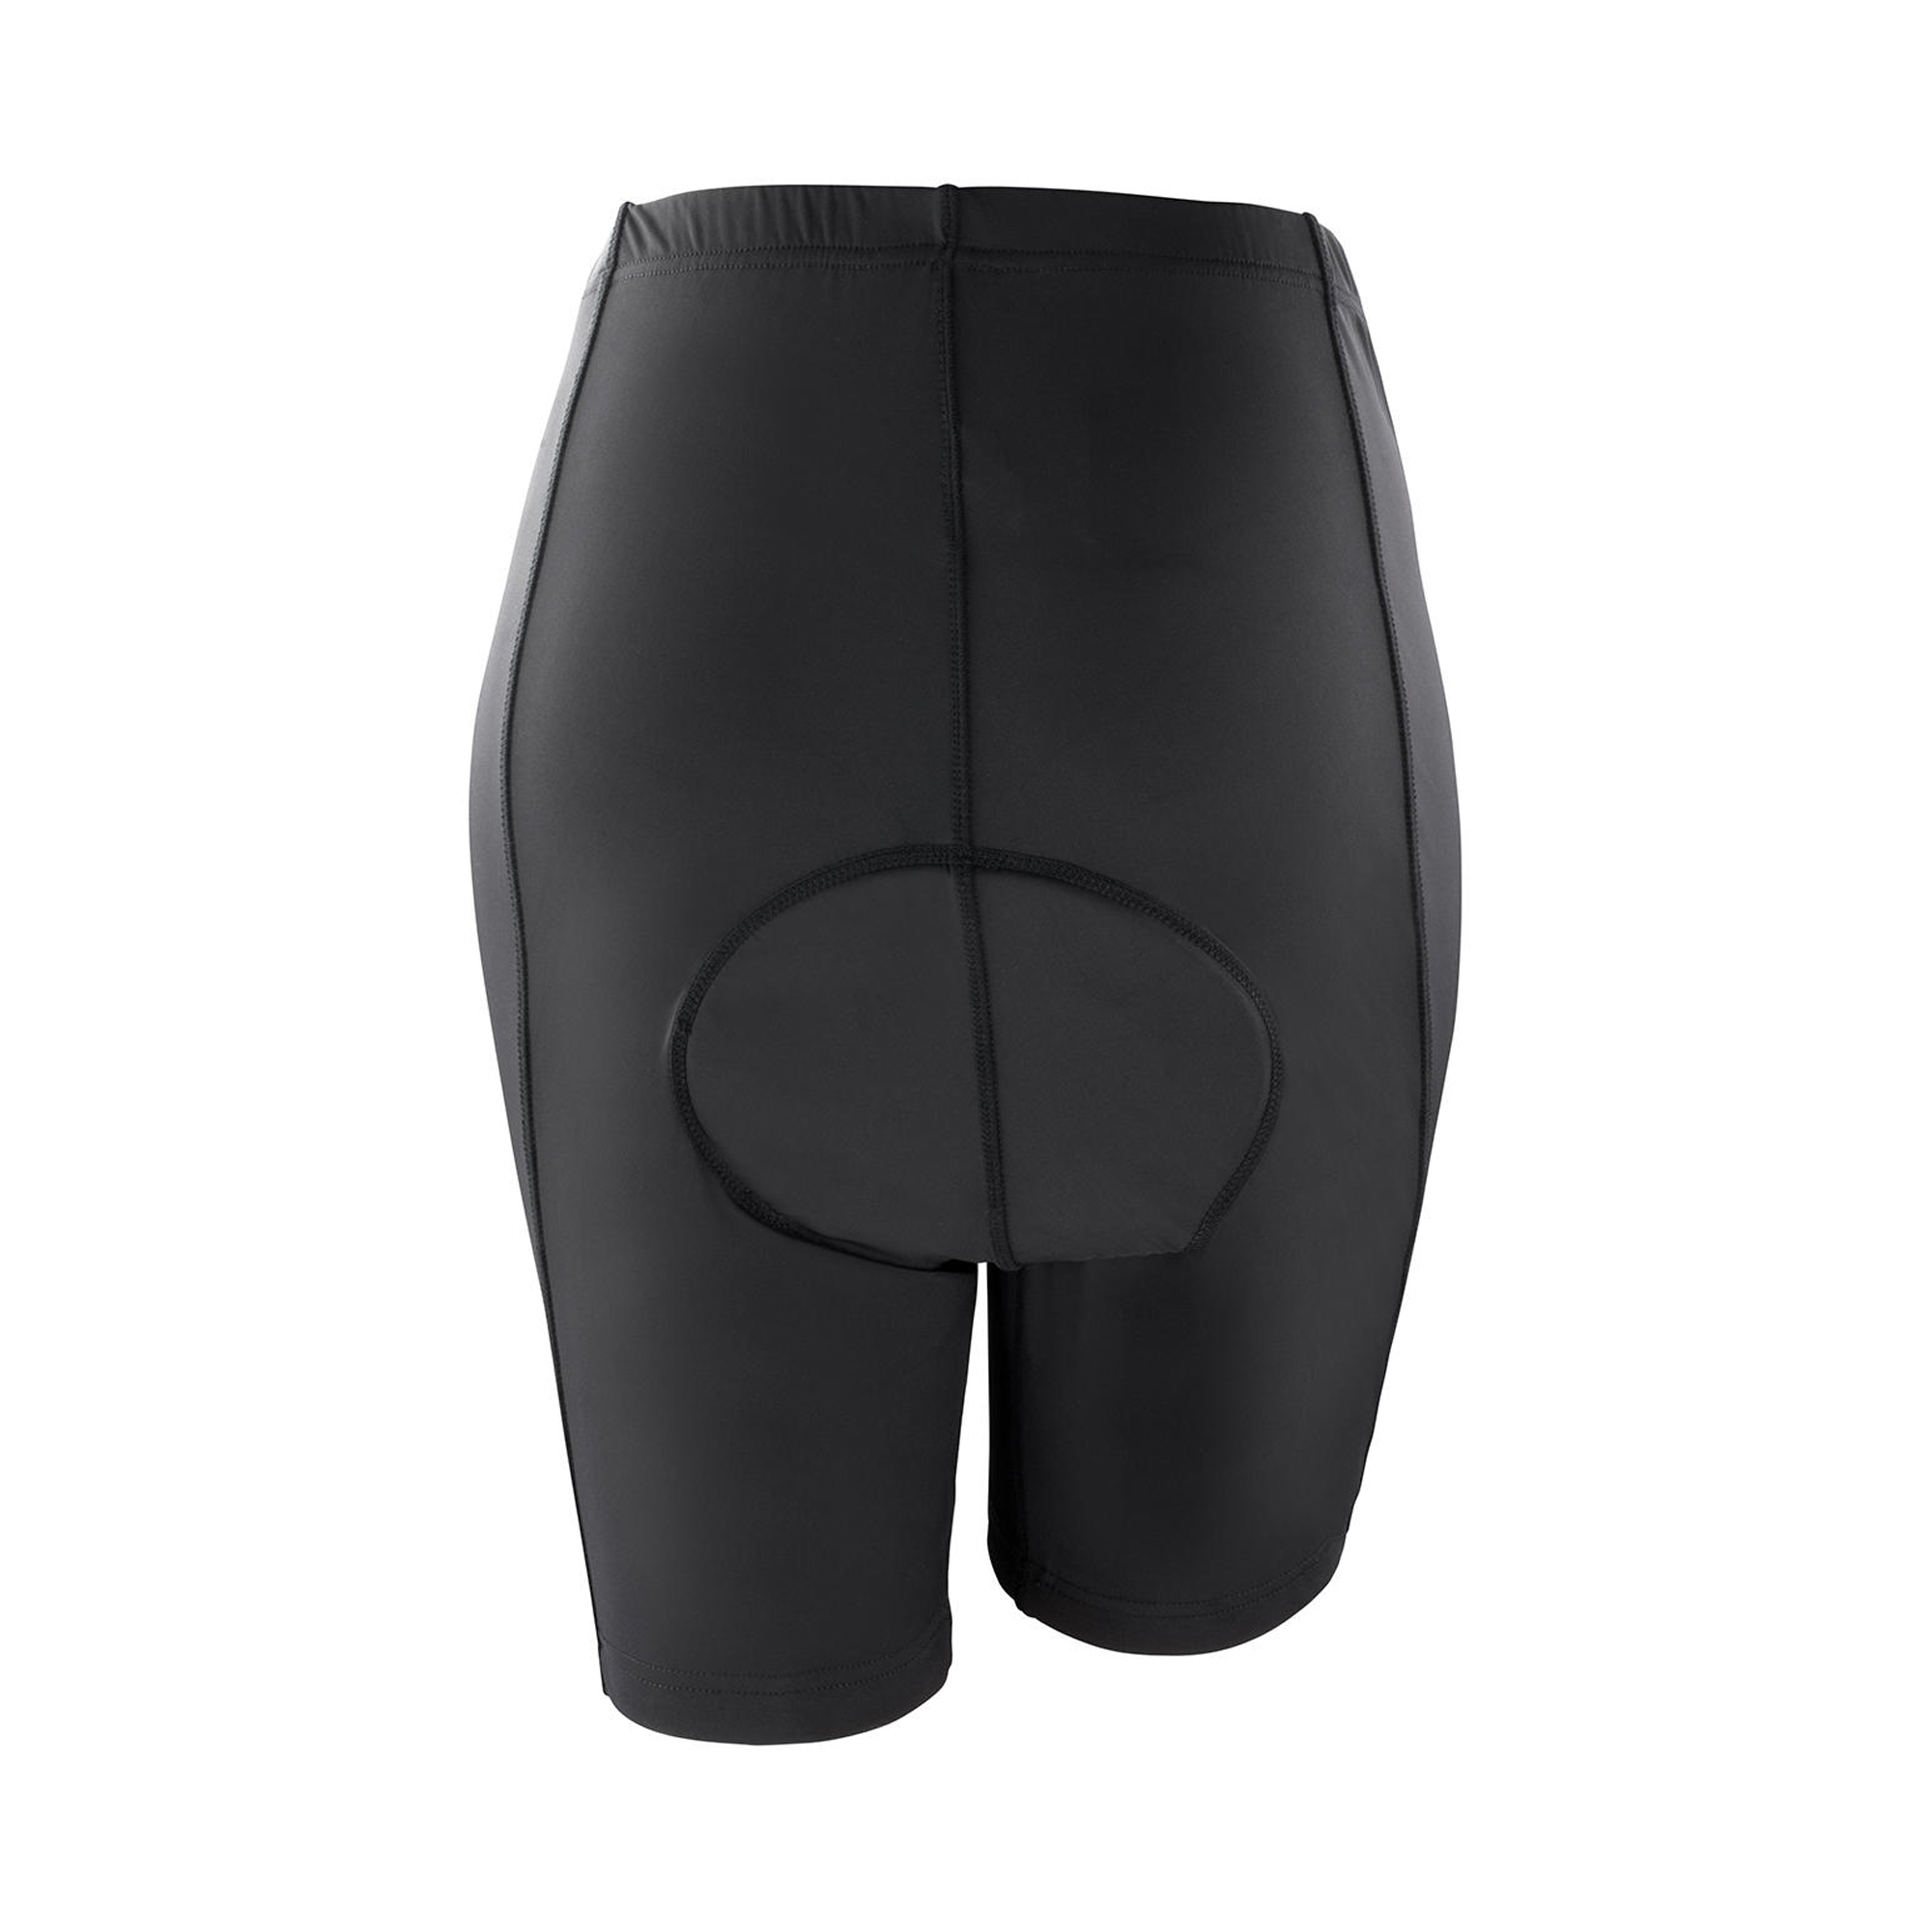 Pantalones Cortos De Ciclismo Acolchados Modelo Padded - Negro  MKP